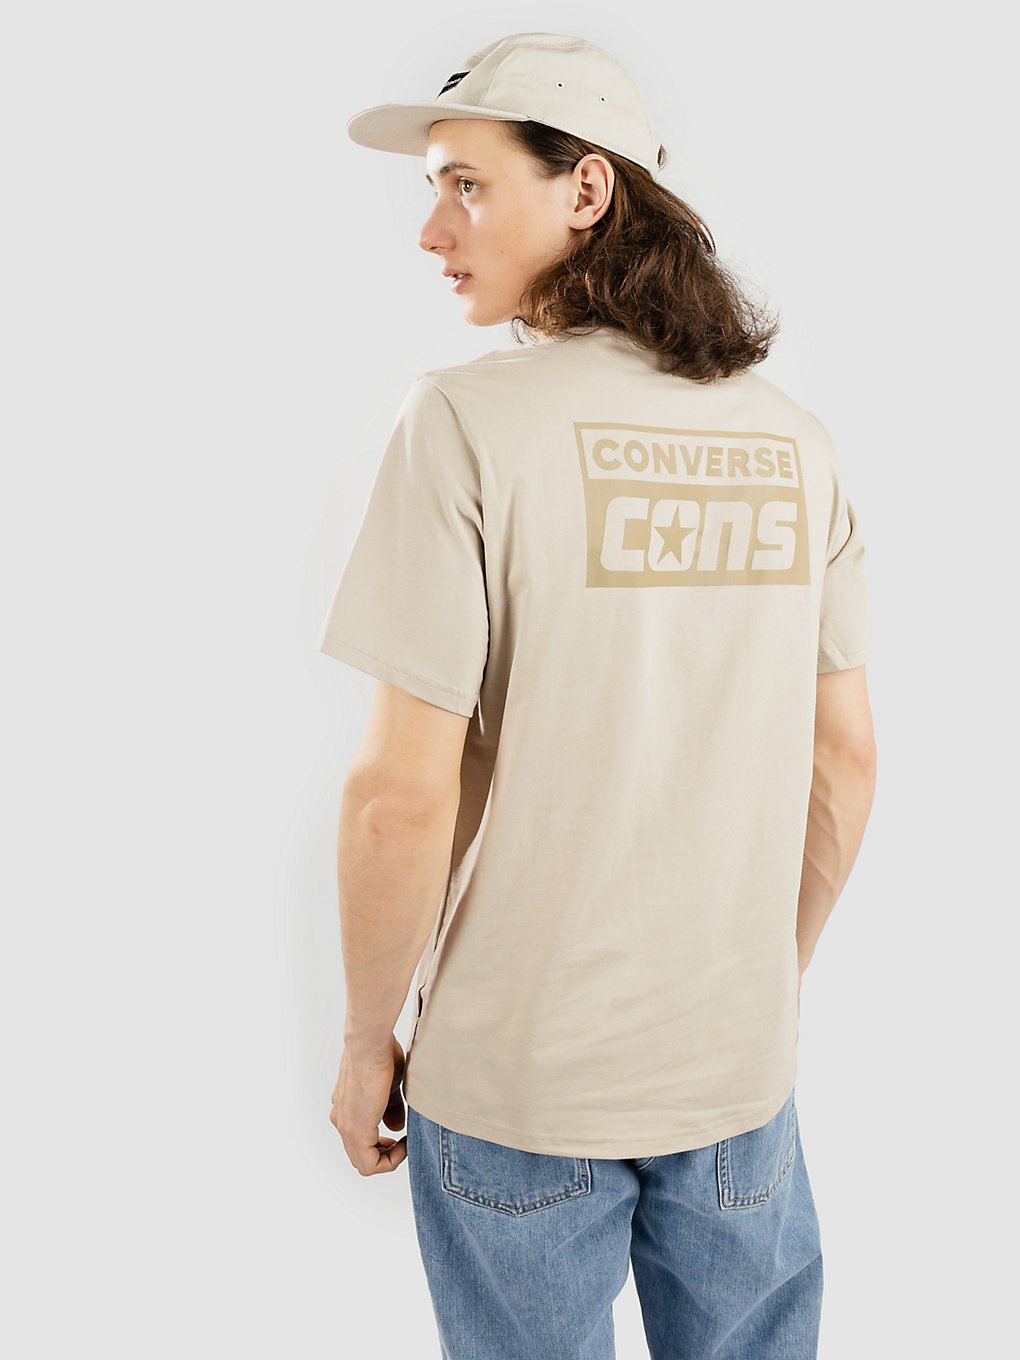 Converse Cons T-Shirt beach stone kaufen